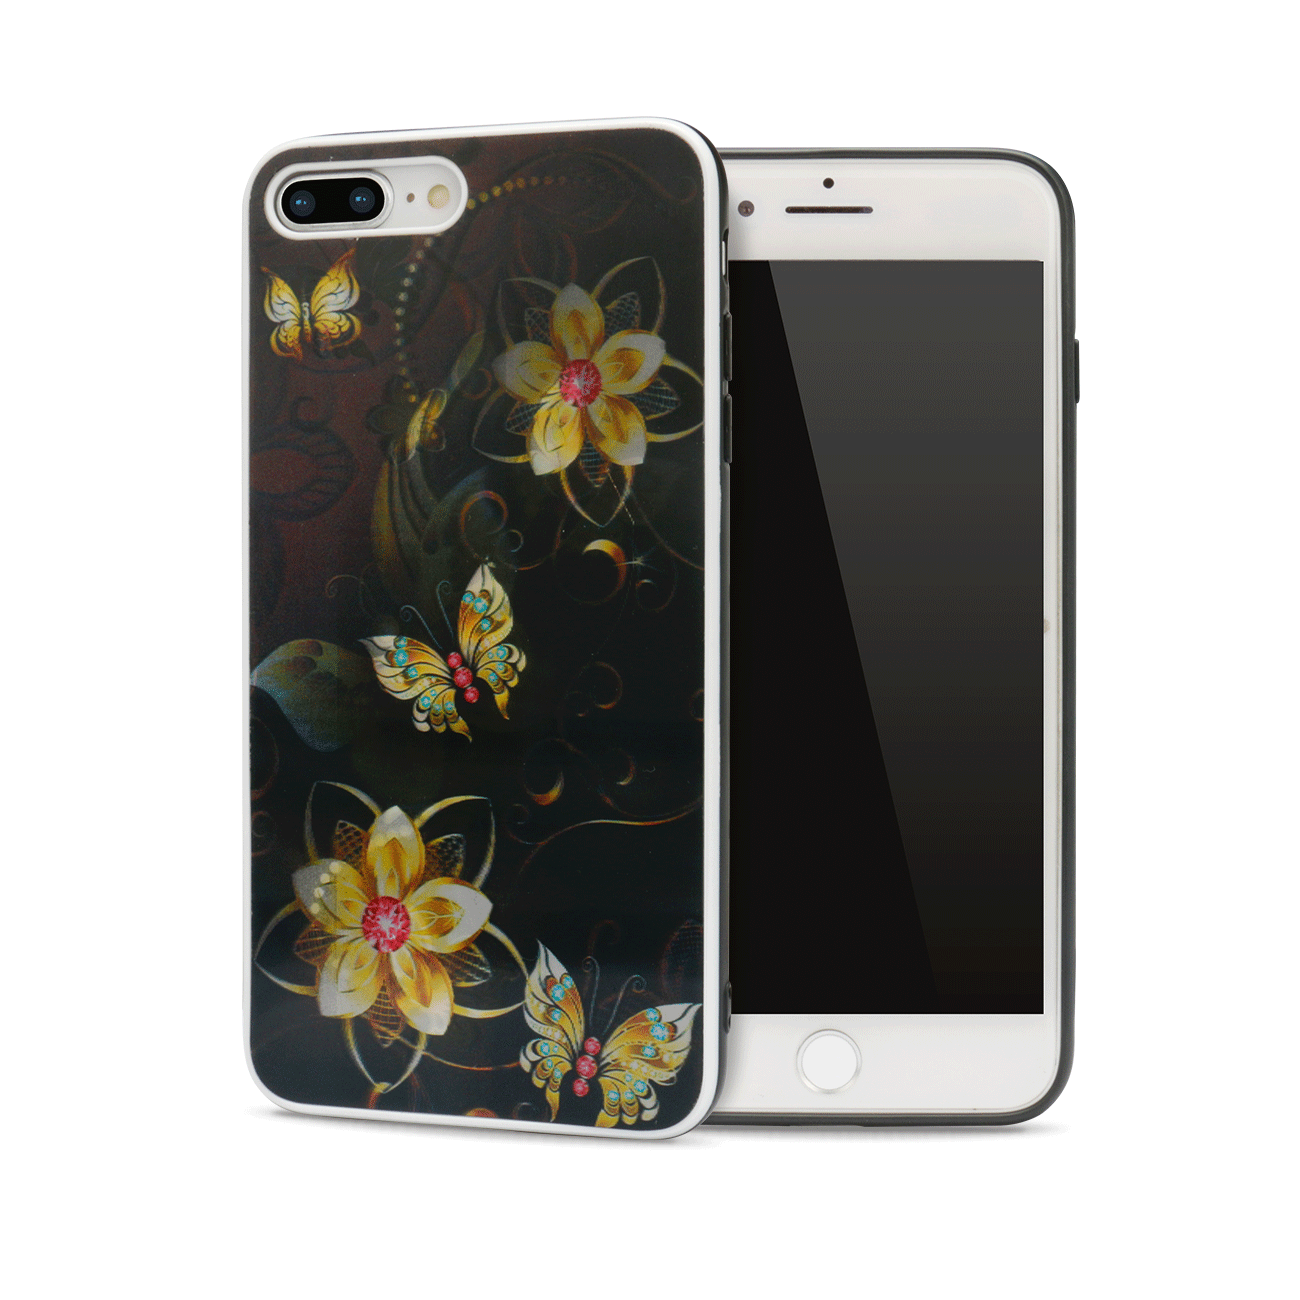 iPHONE 8 Plus / 7 Plus 3D Dynamic Change Lenticular Design Case (Butterfly)